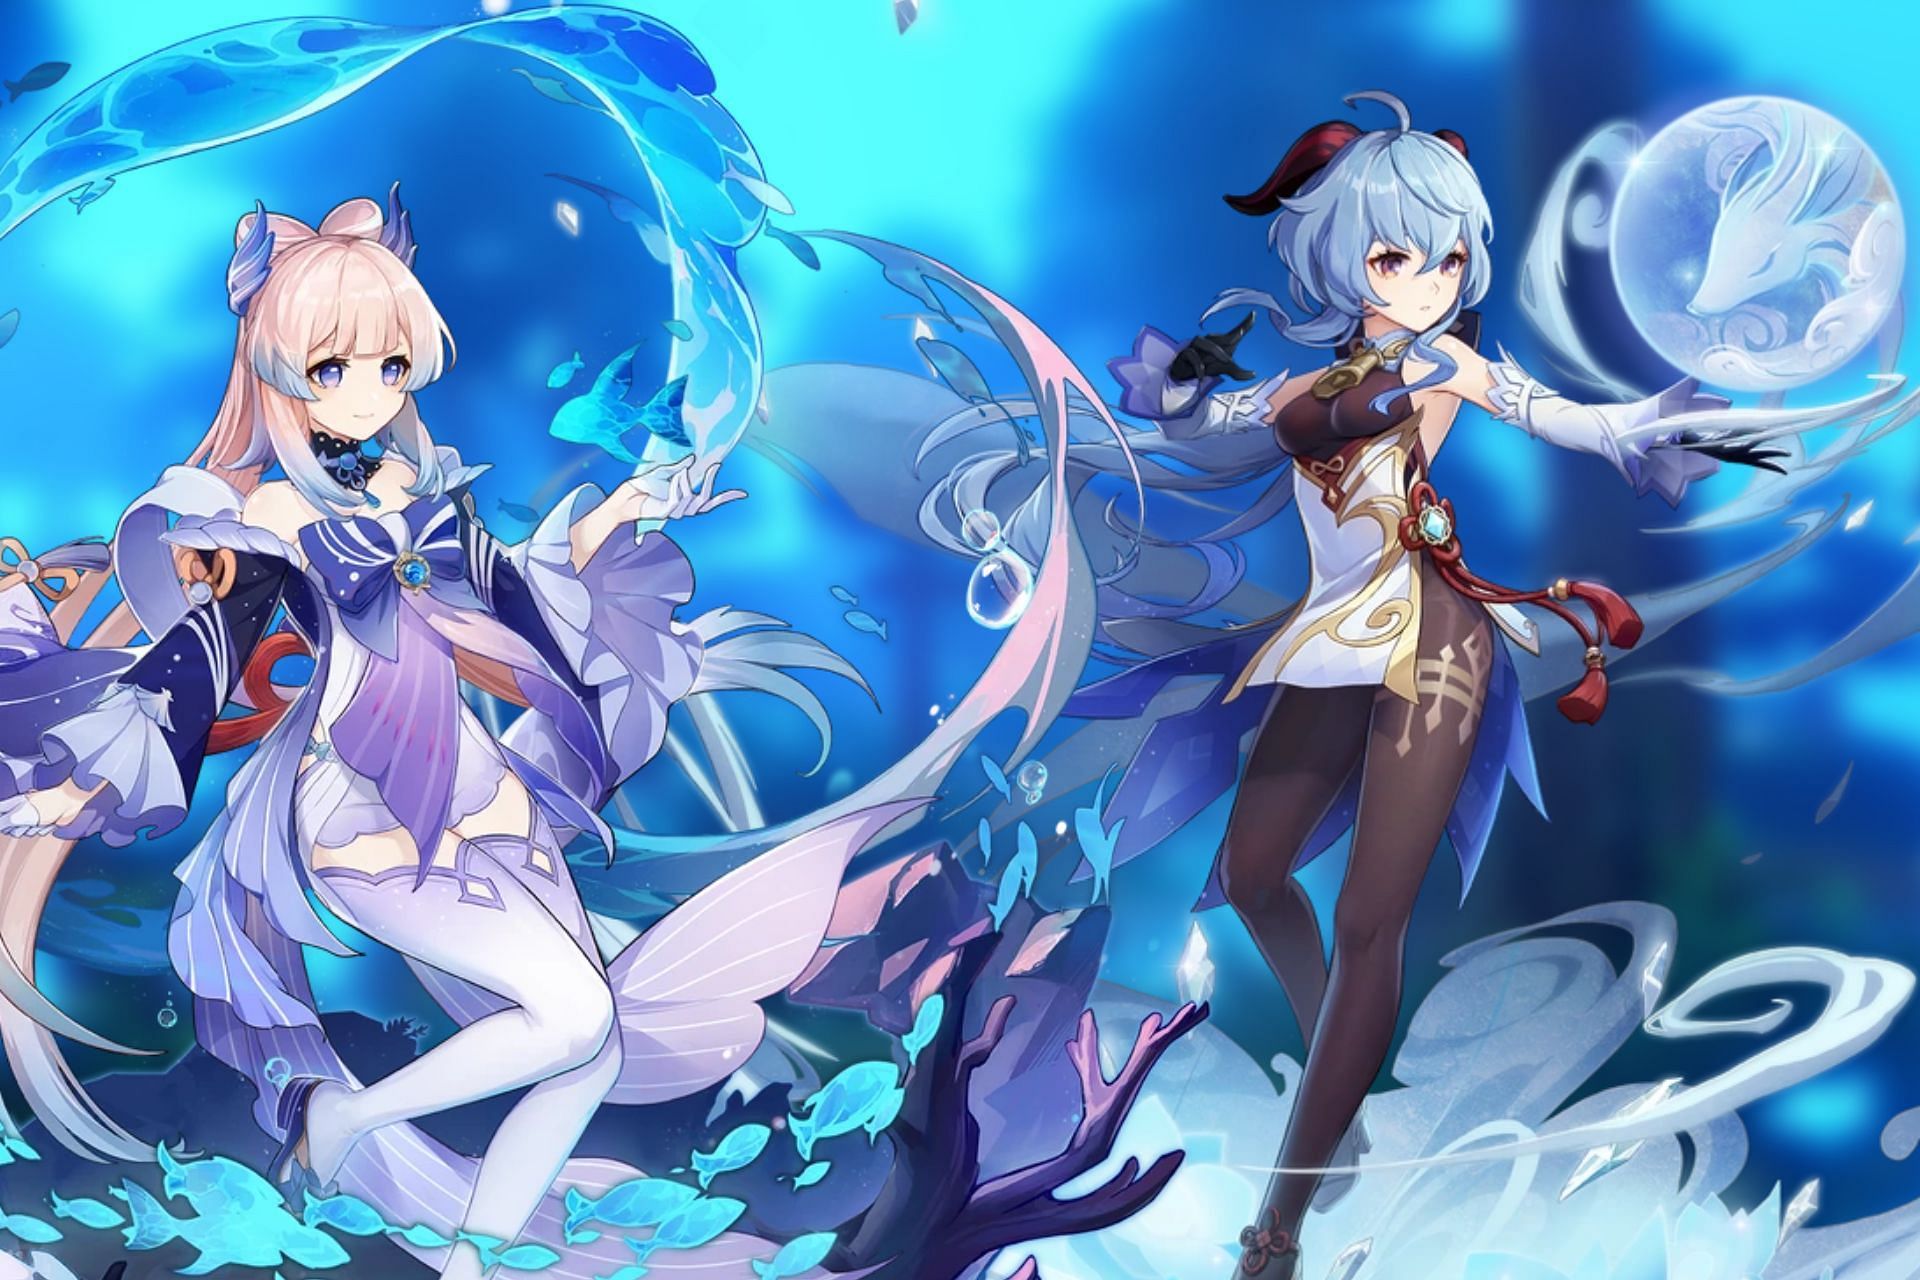 Ganyu and Kokomi in the new character banners (Image via HoYoverse)